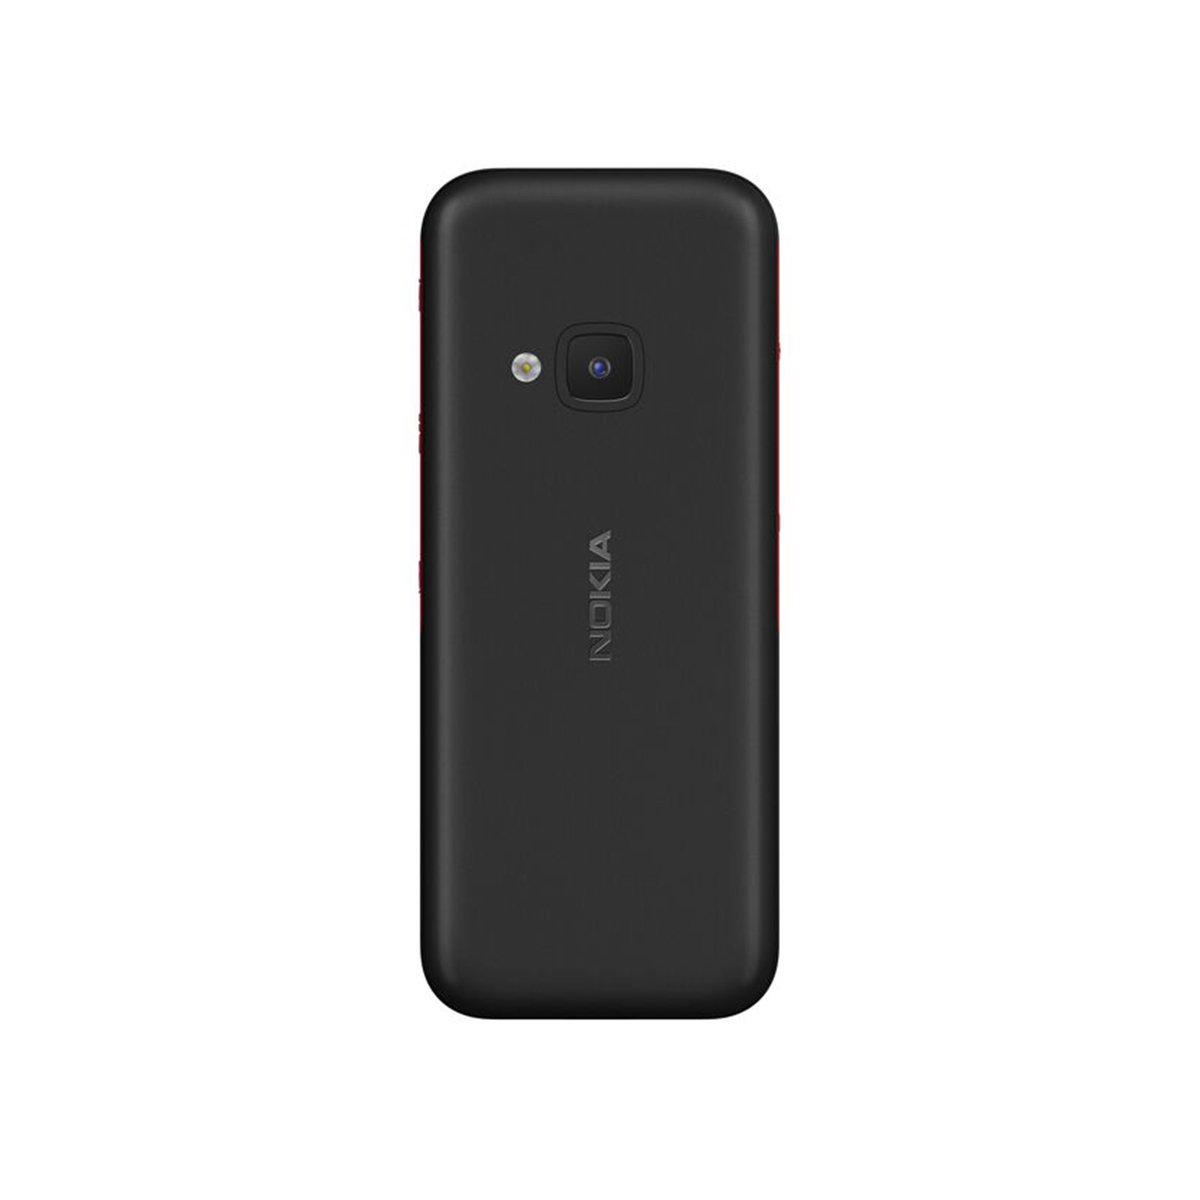 Nokia 5310 Black/Red